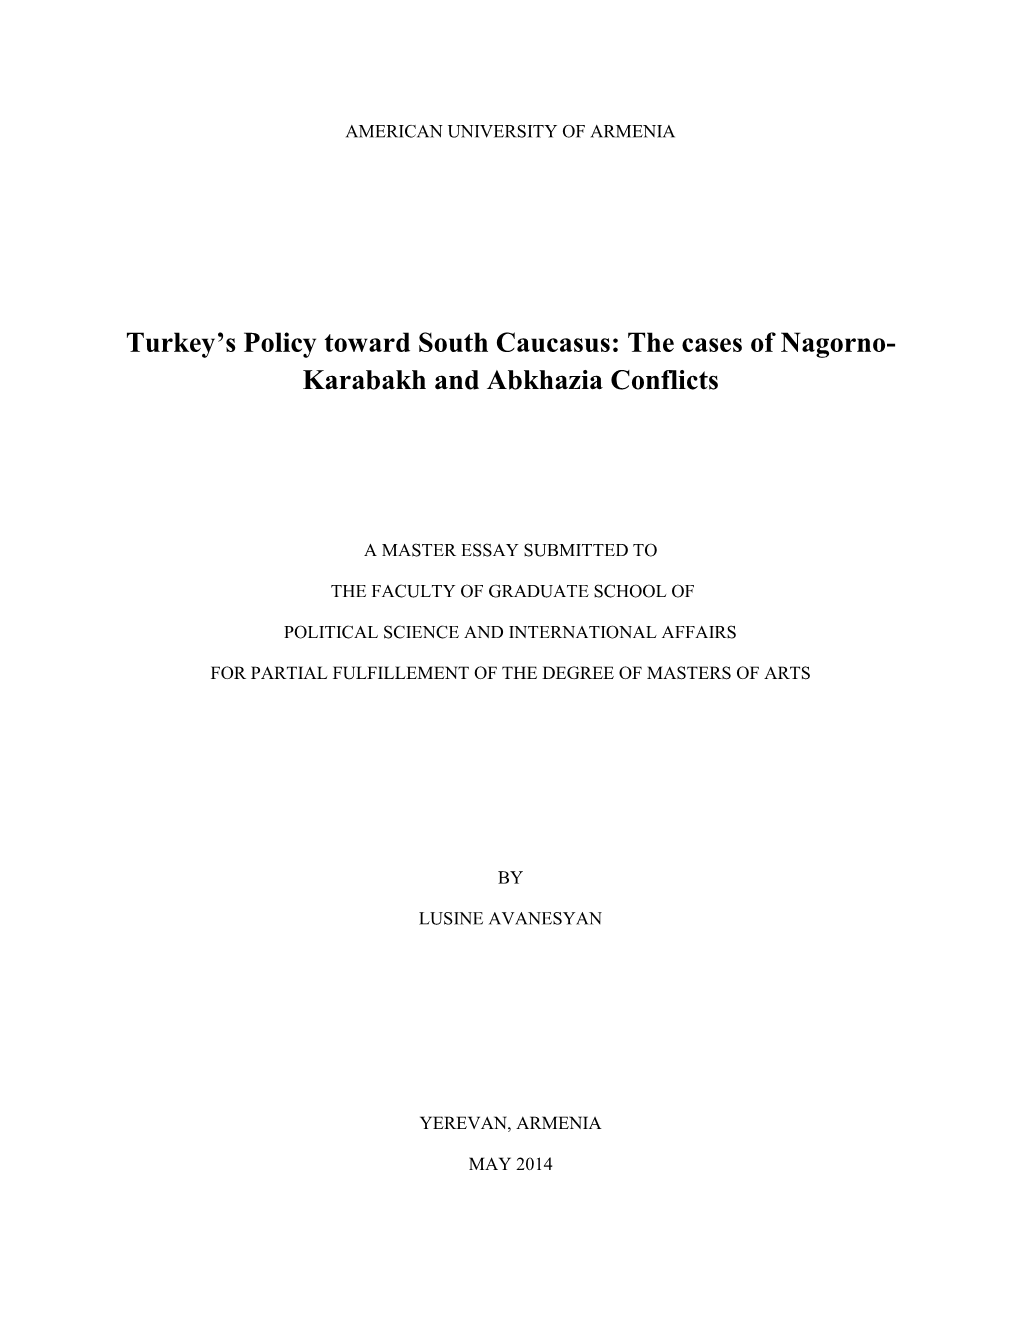 Turkey's Policy Toward South Caucasus